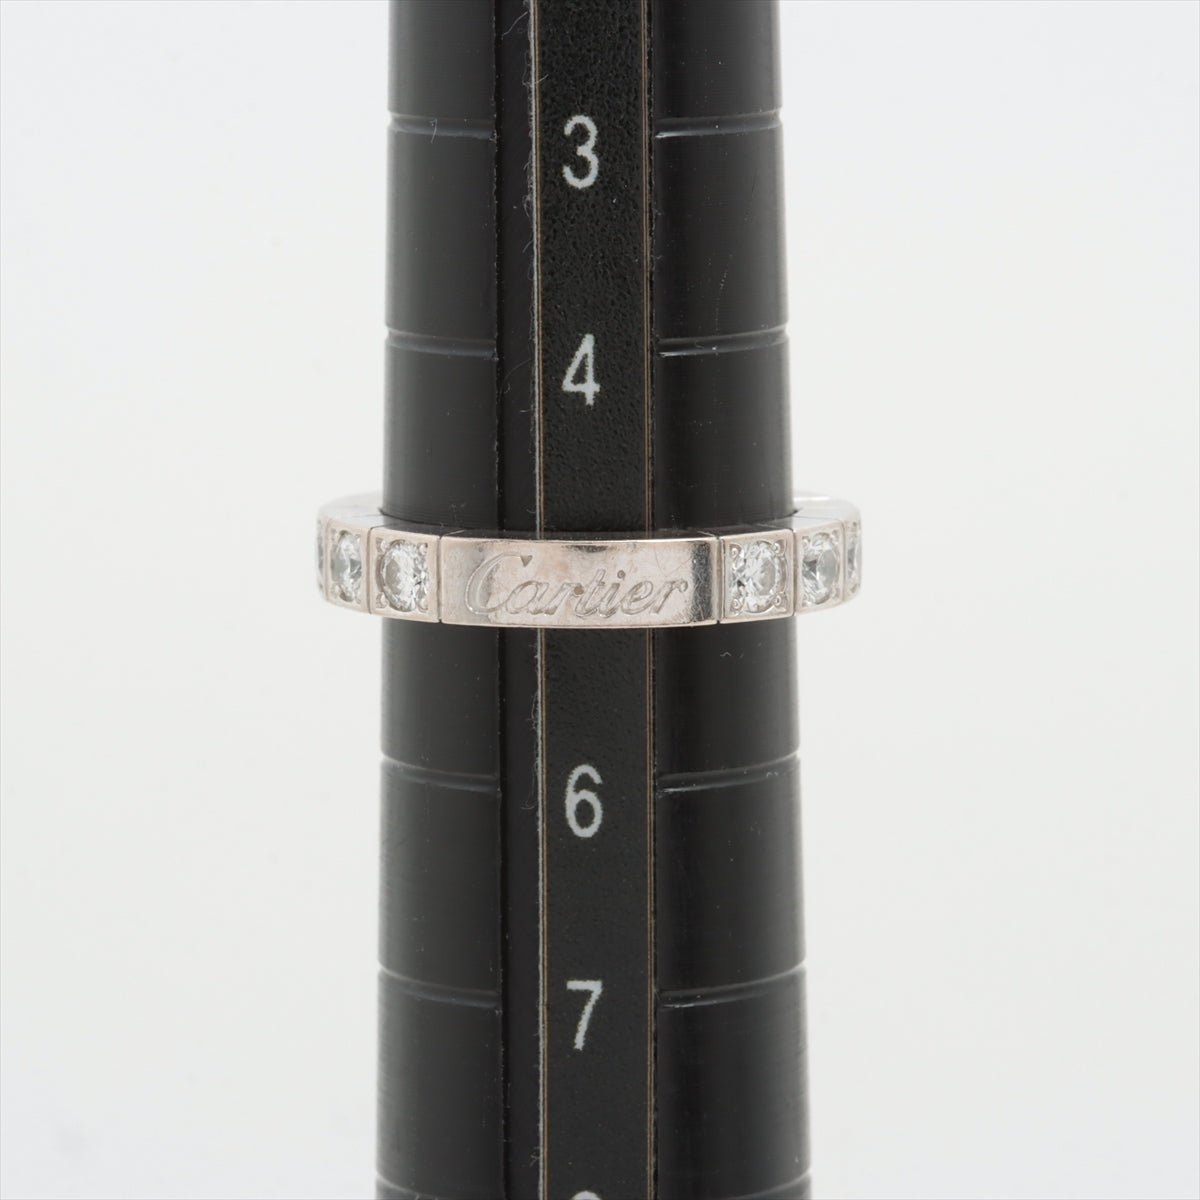 Cartier Raniere full diamond rings 750(WG) 4.1g 45